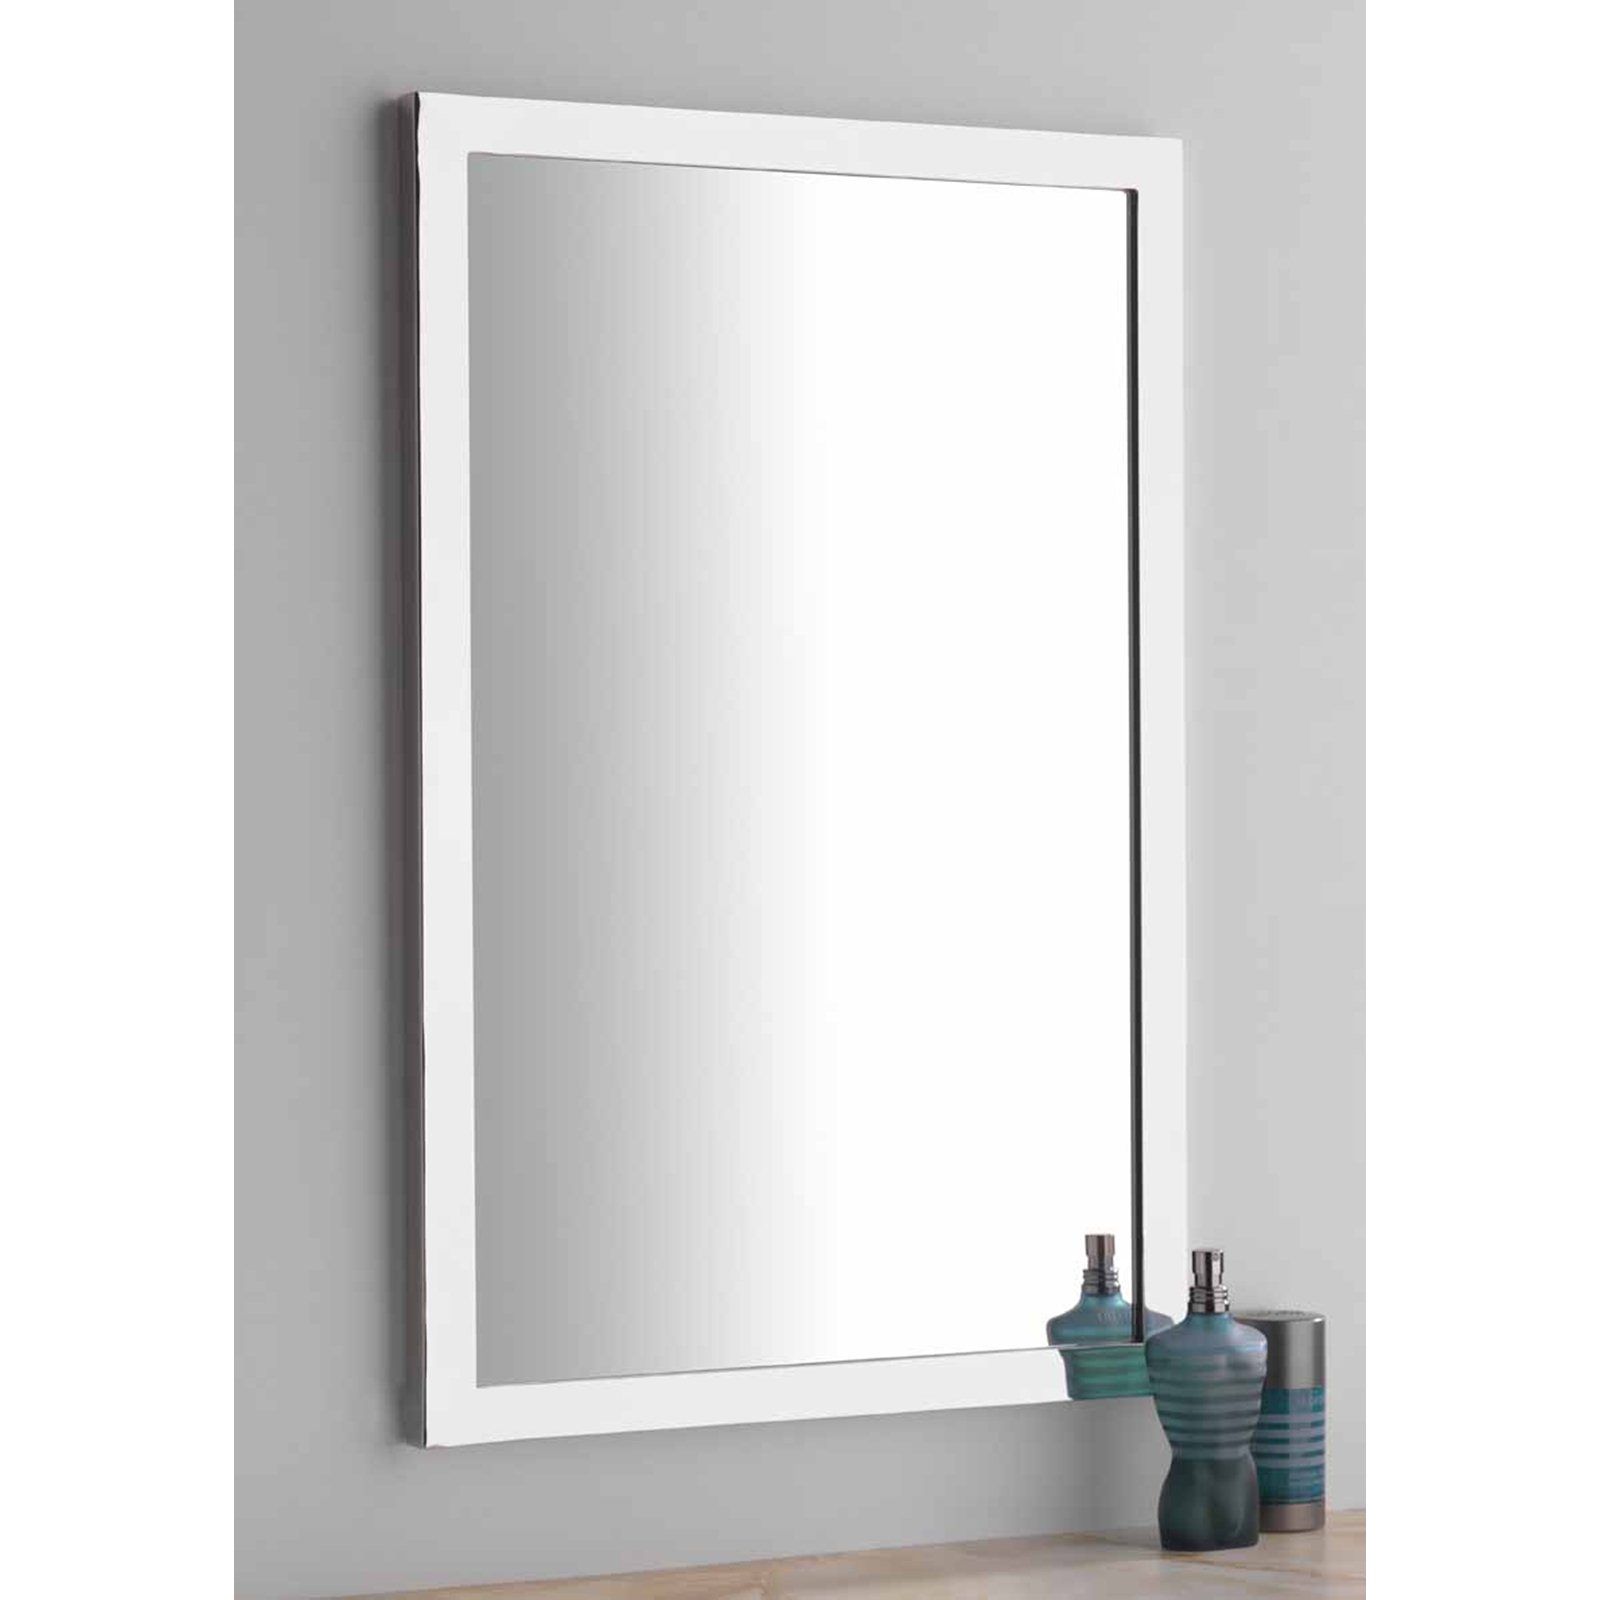 Handmade Rectangular Bathroom Mirror With Chrome Rectangular Wall Mirrors (View 11 of 15)